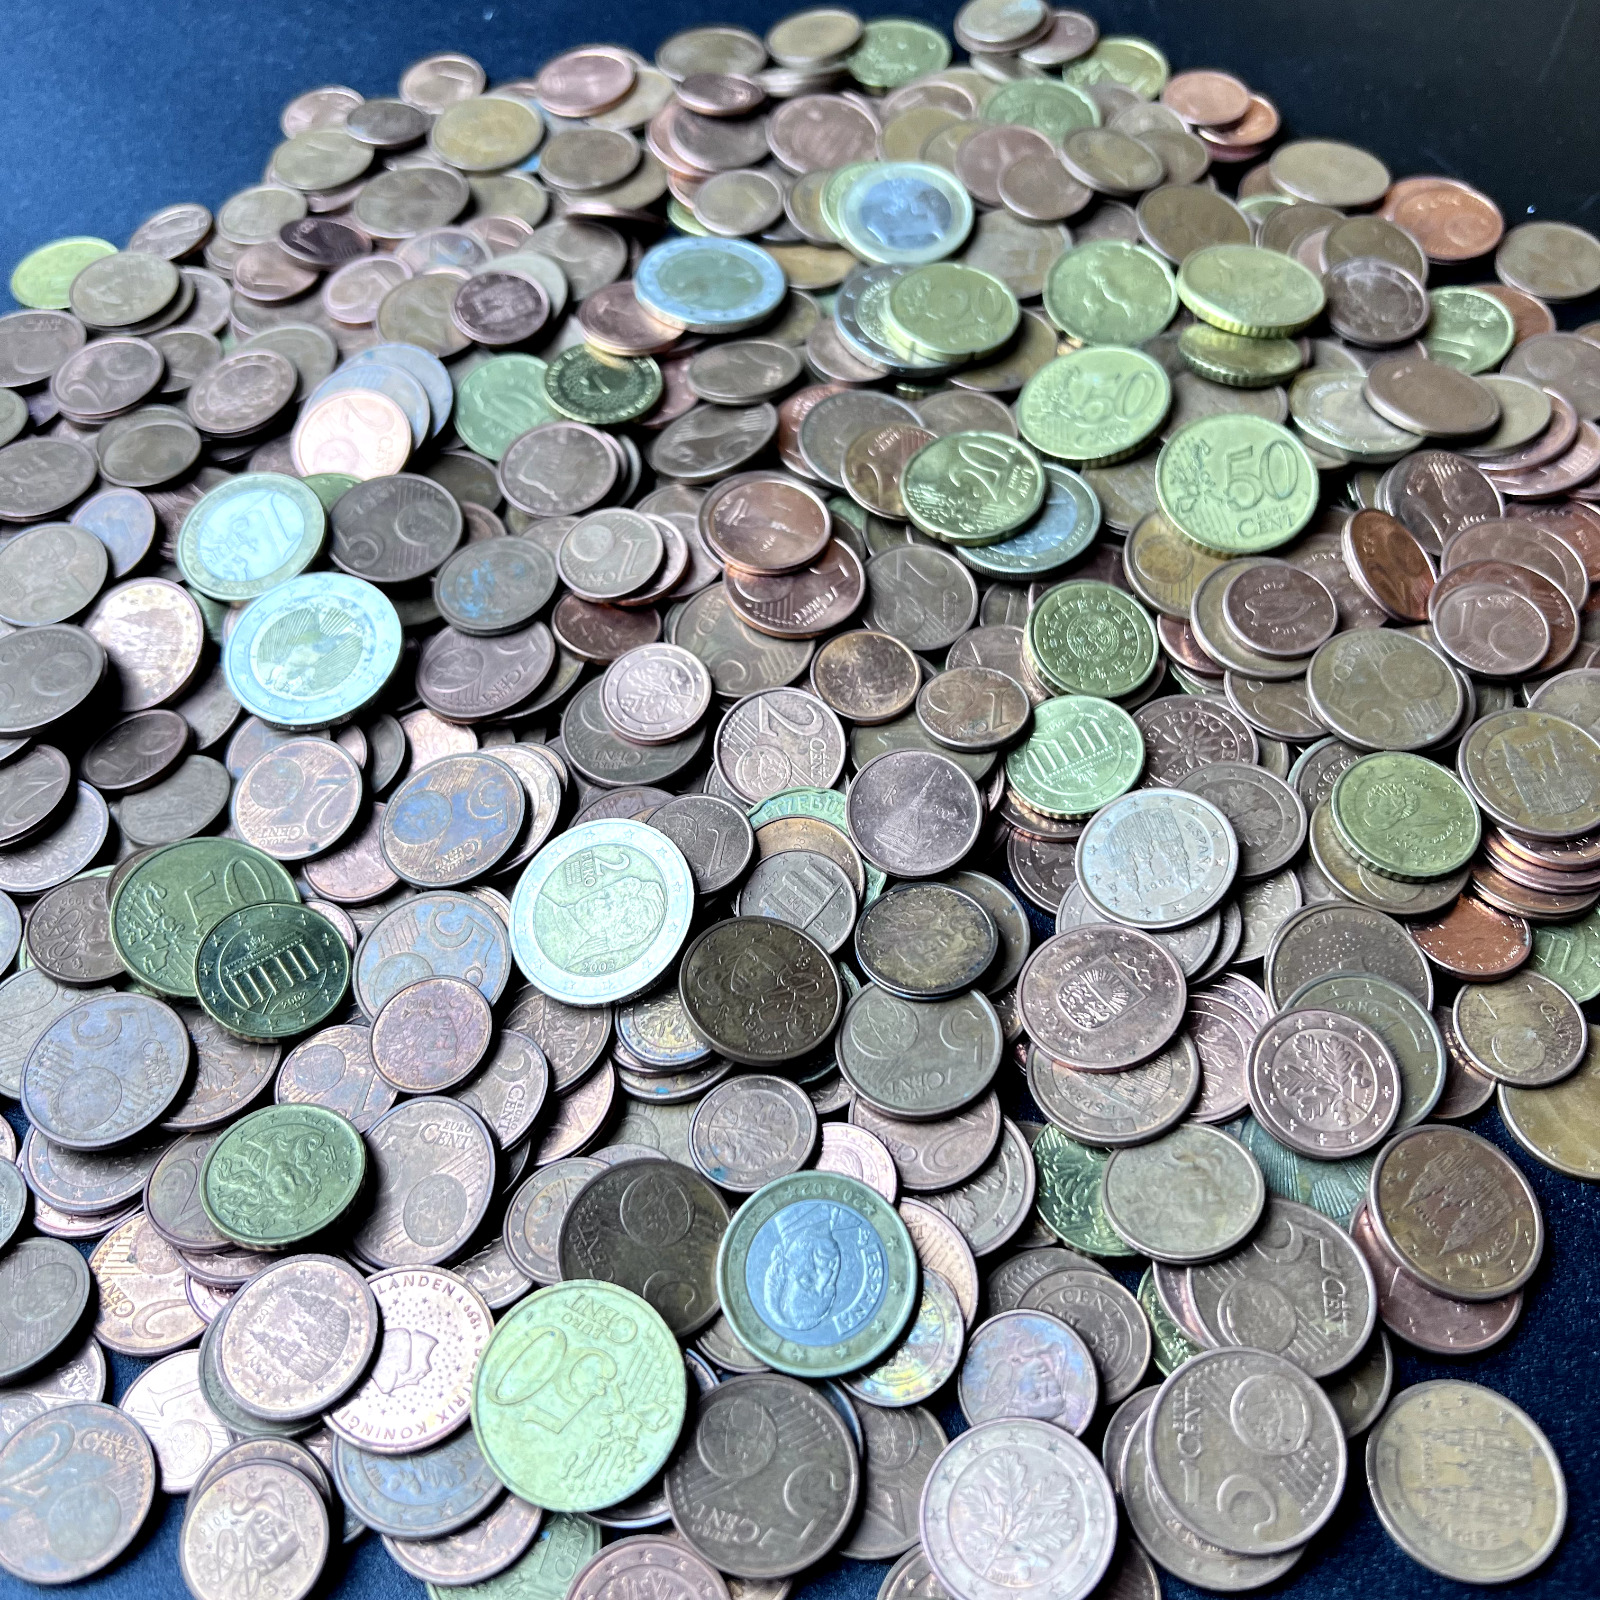 European Coins: 1LB Random Coins from Eurozone, a Collection Lot of ~120 Coins